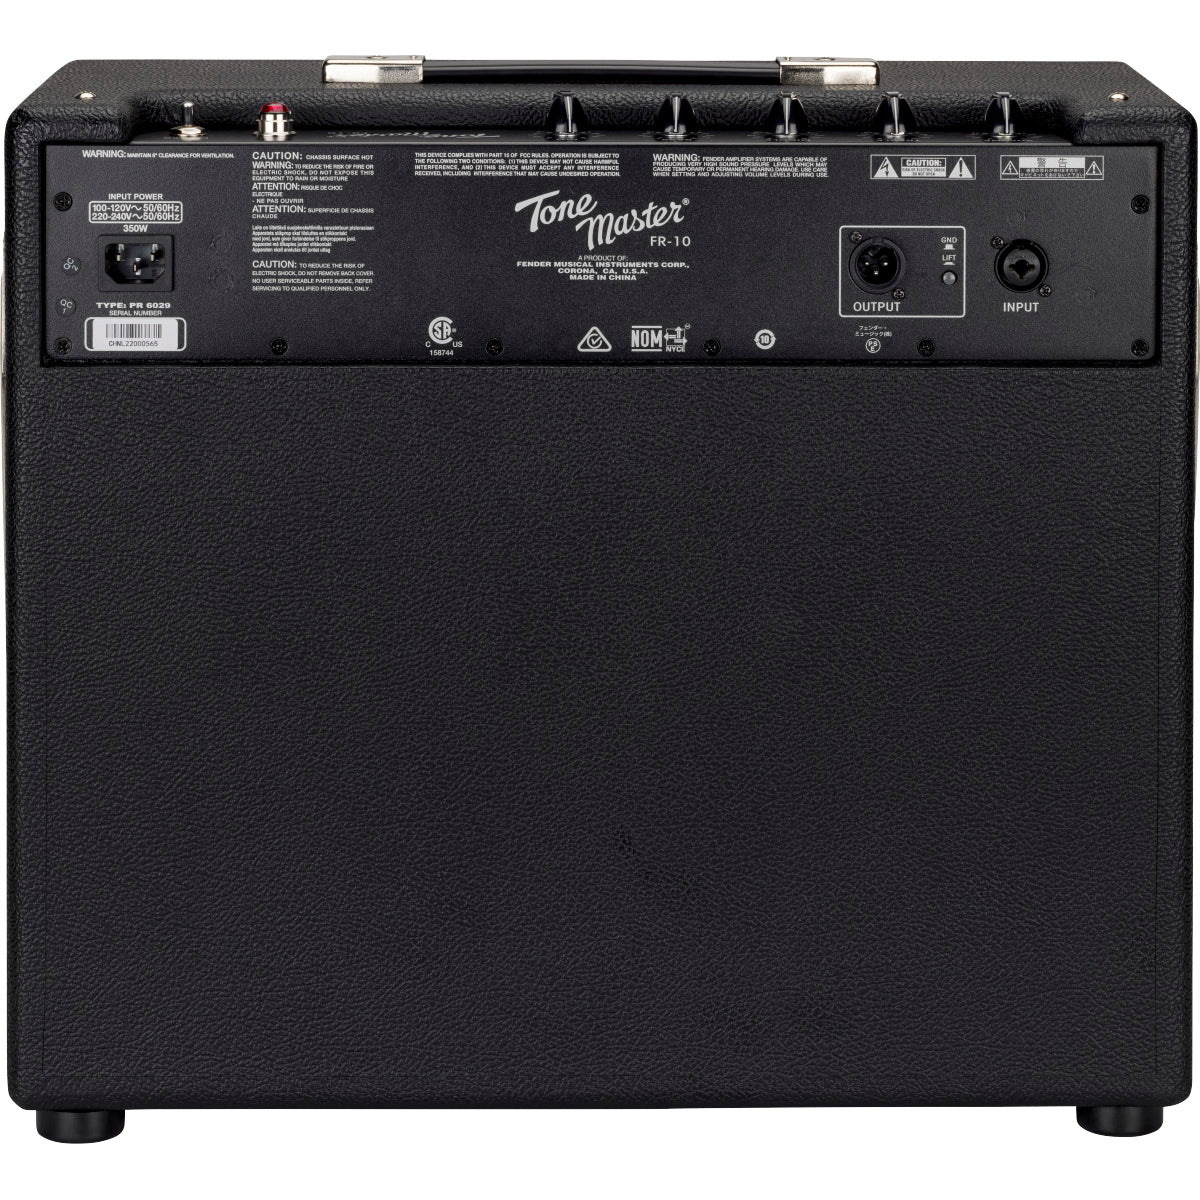 Fender Tone Master FR-10 Powered Speaker Cabinet 1x10, View 2